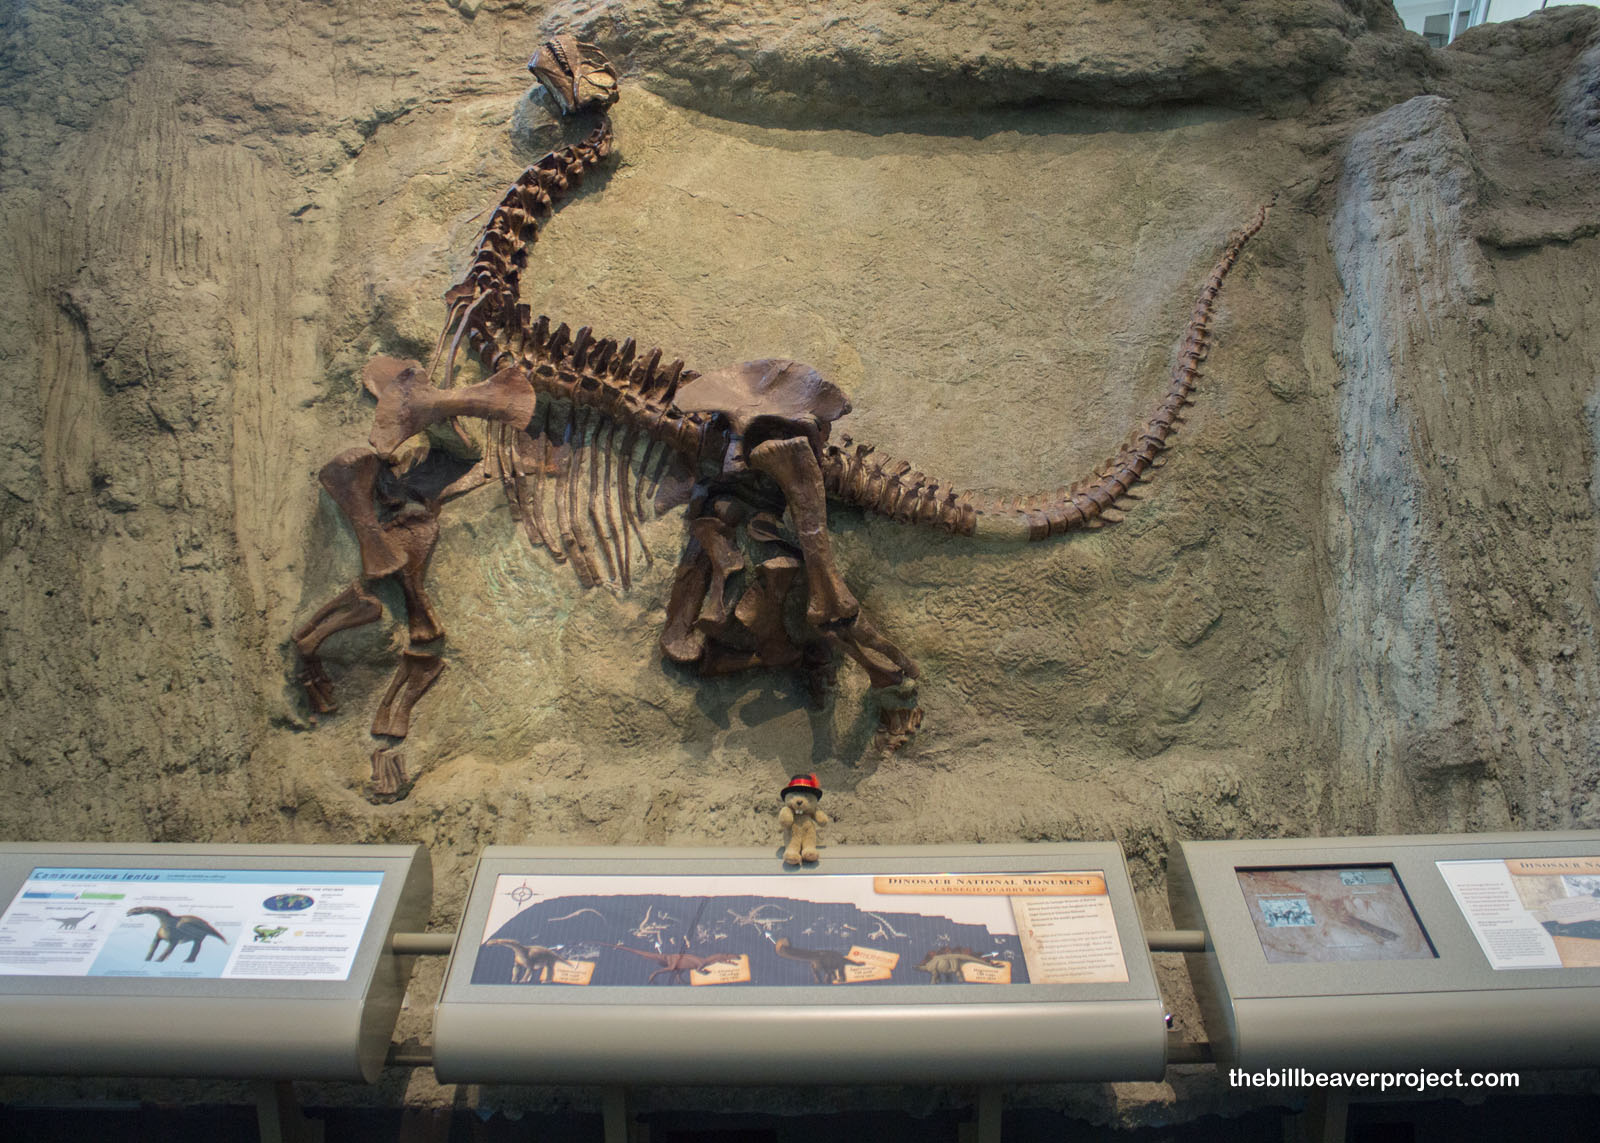 The original camarosaurus to match the one in Dinosaur National Monument!